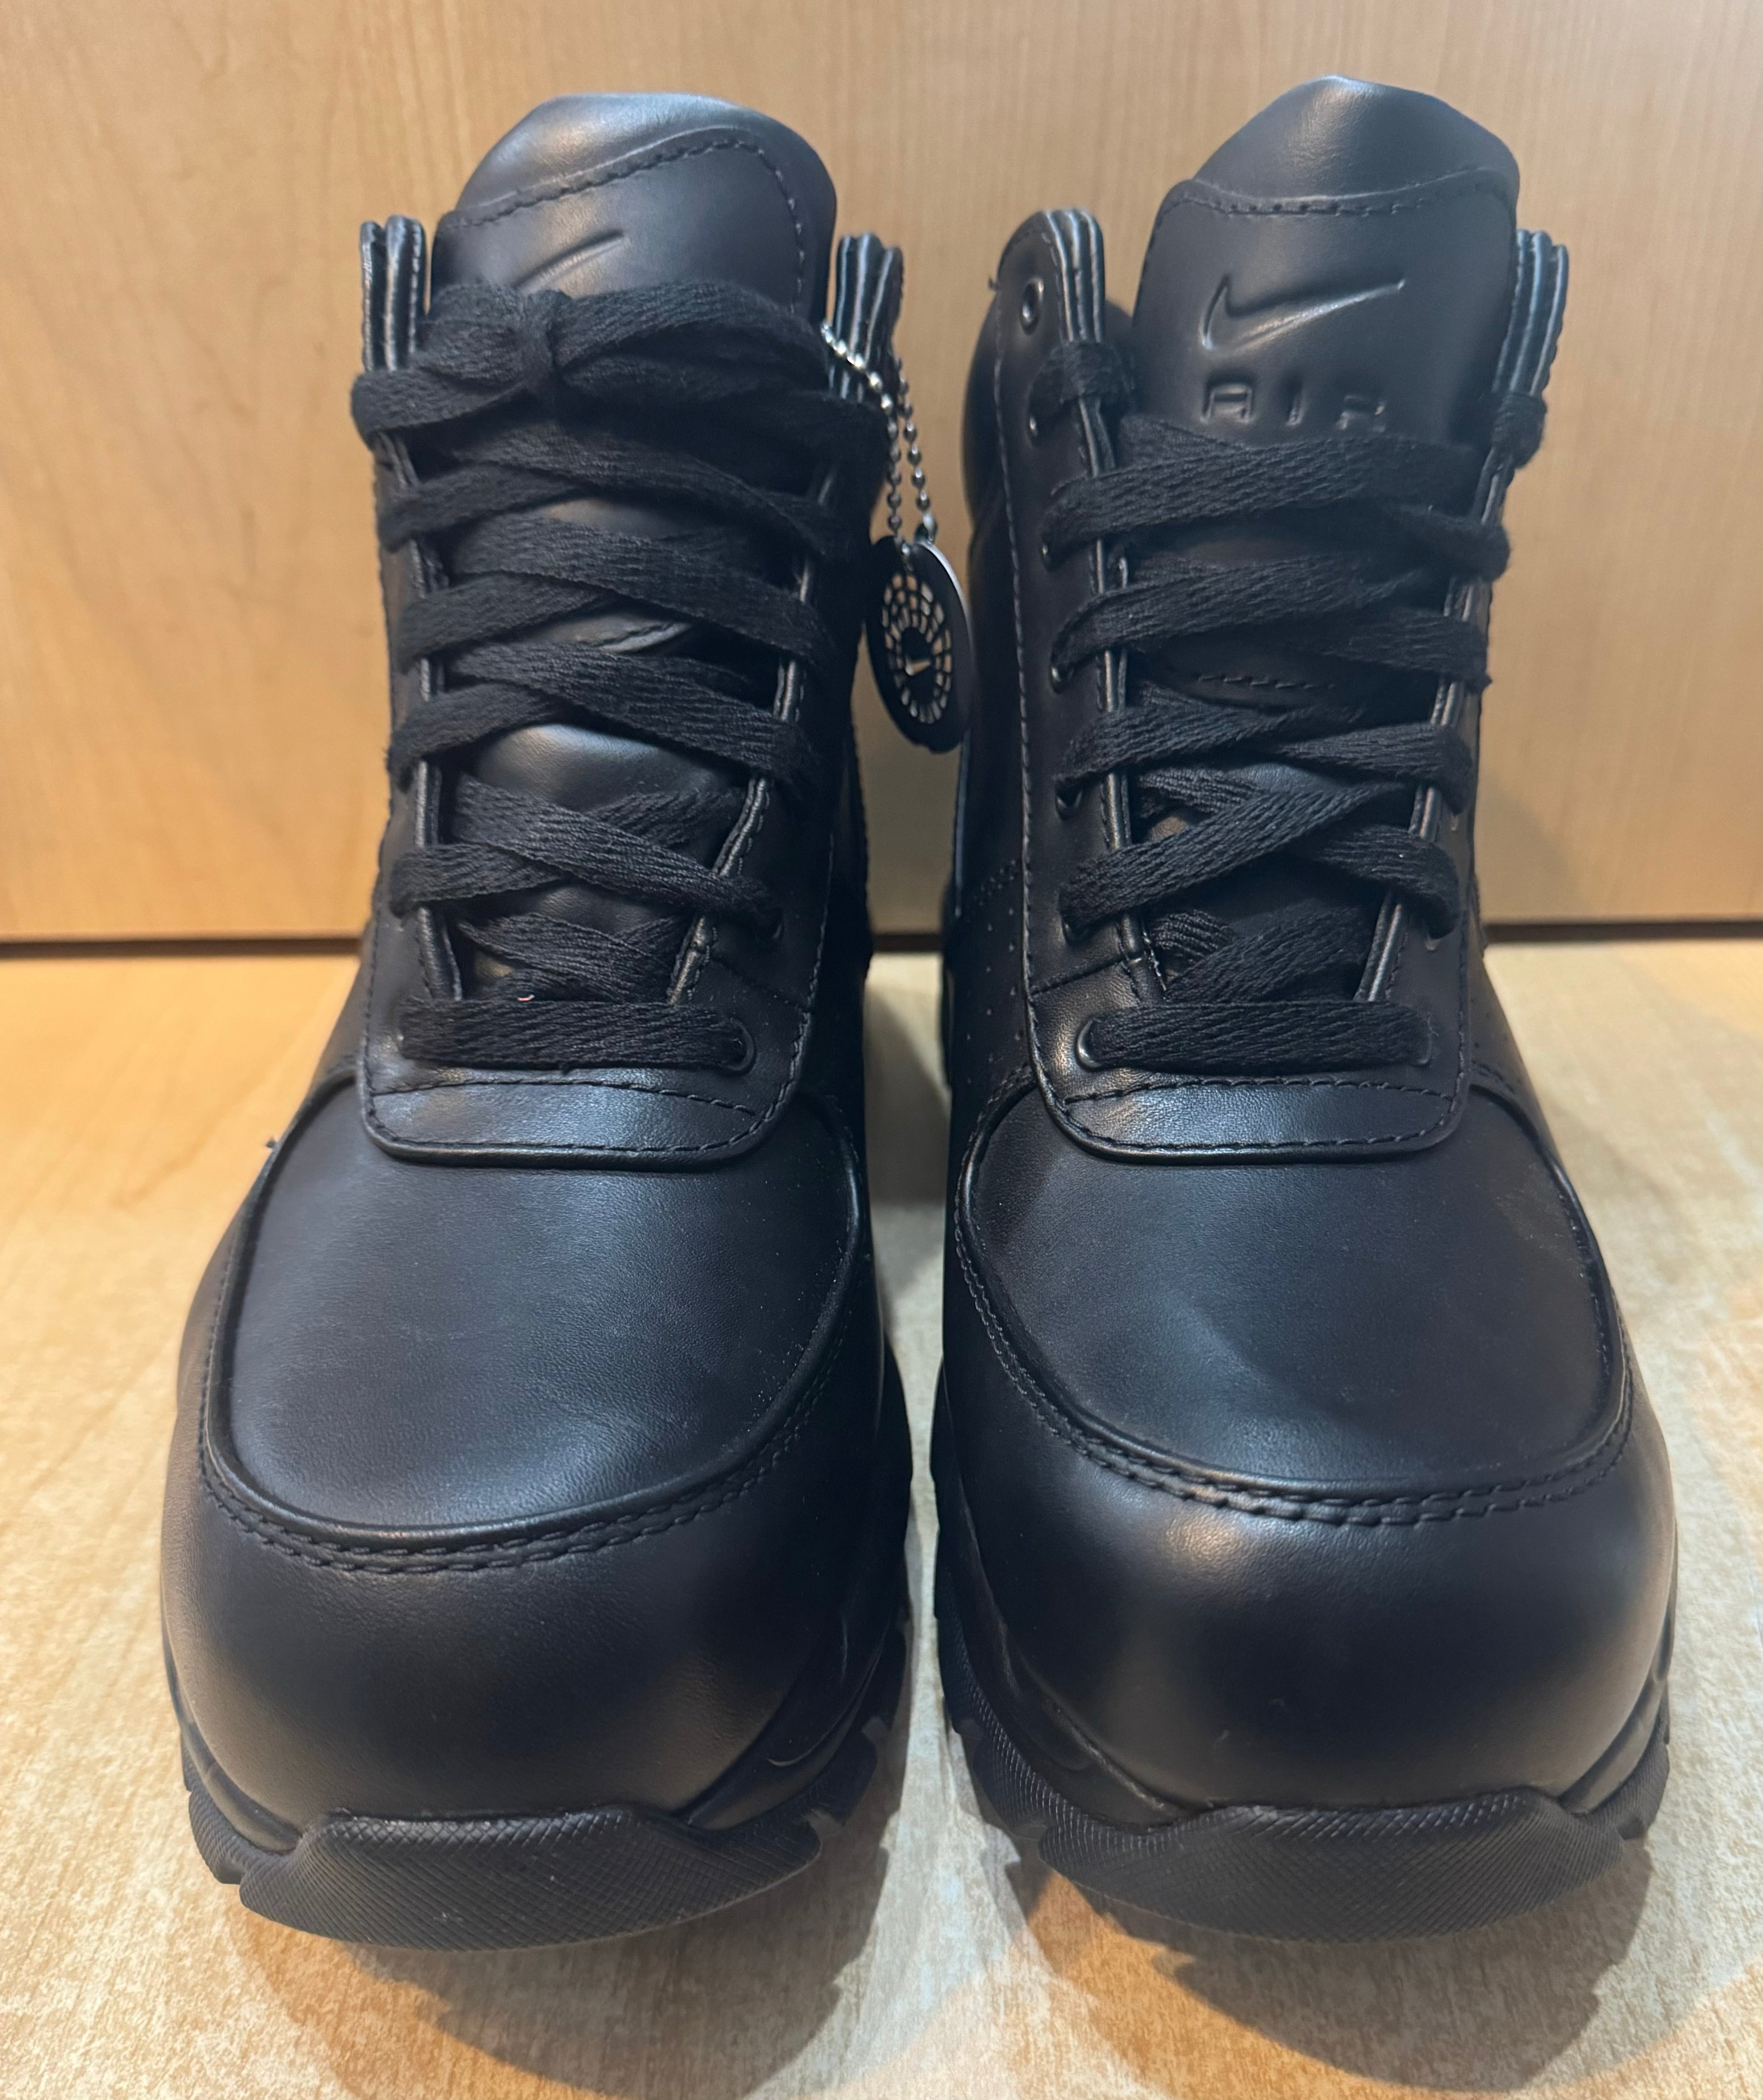 Brand New Nike Air Max Goadome Black Boot Size 9.5